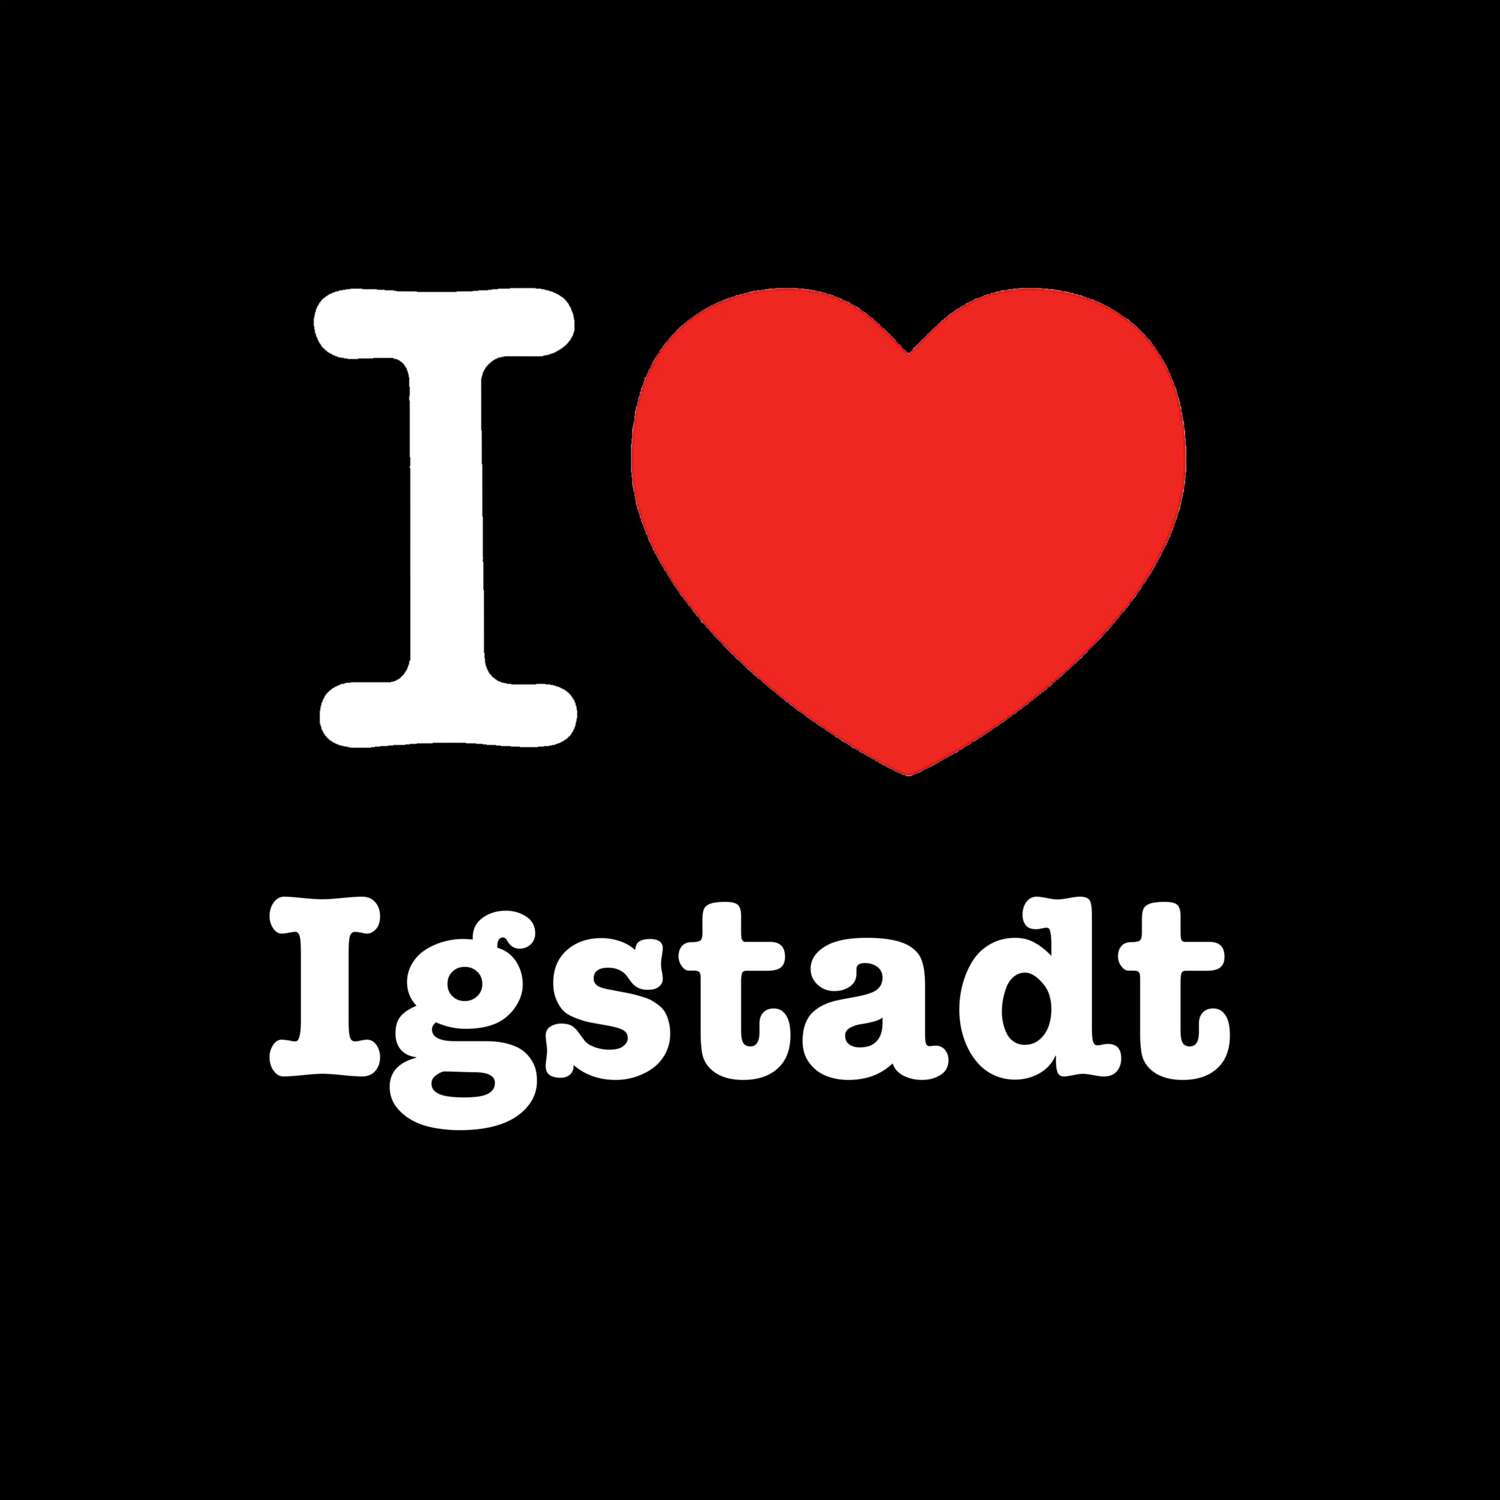 Igstadt T-Shirt »I love«